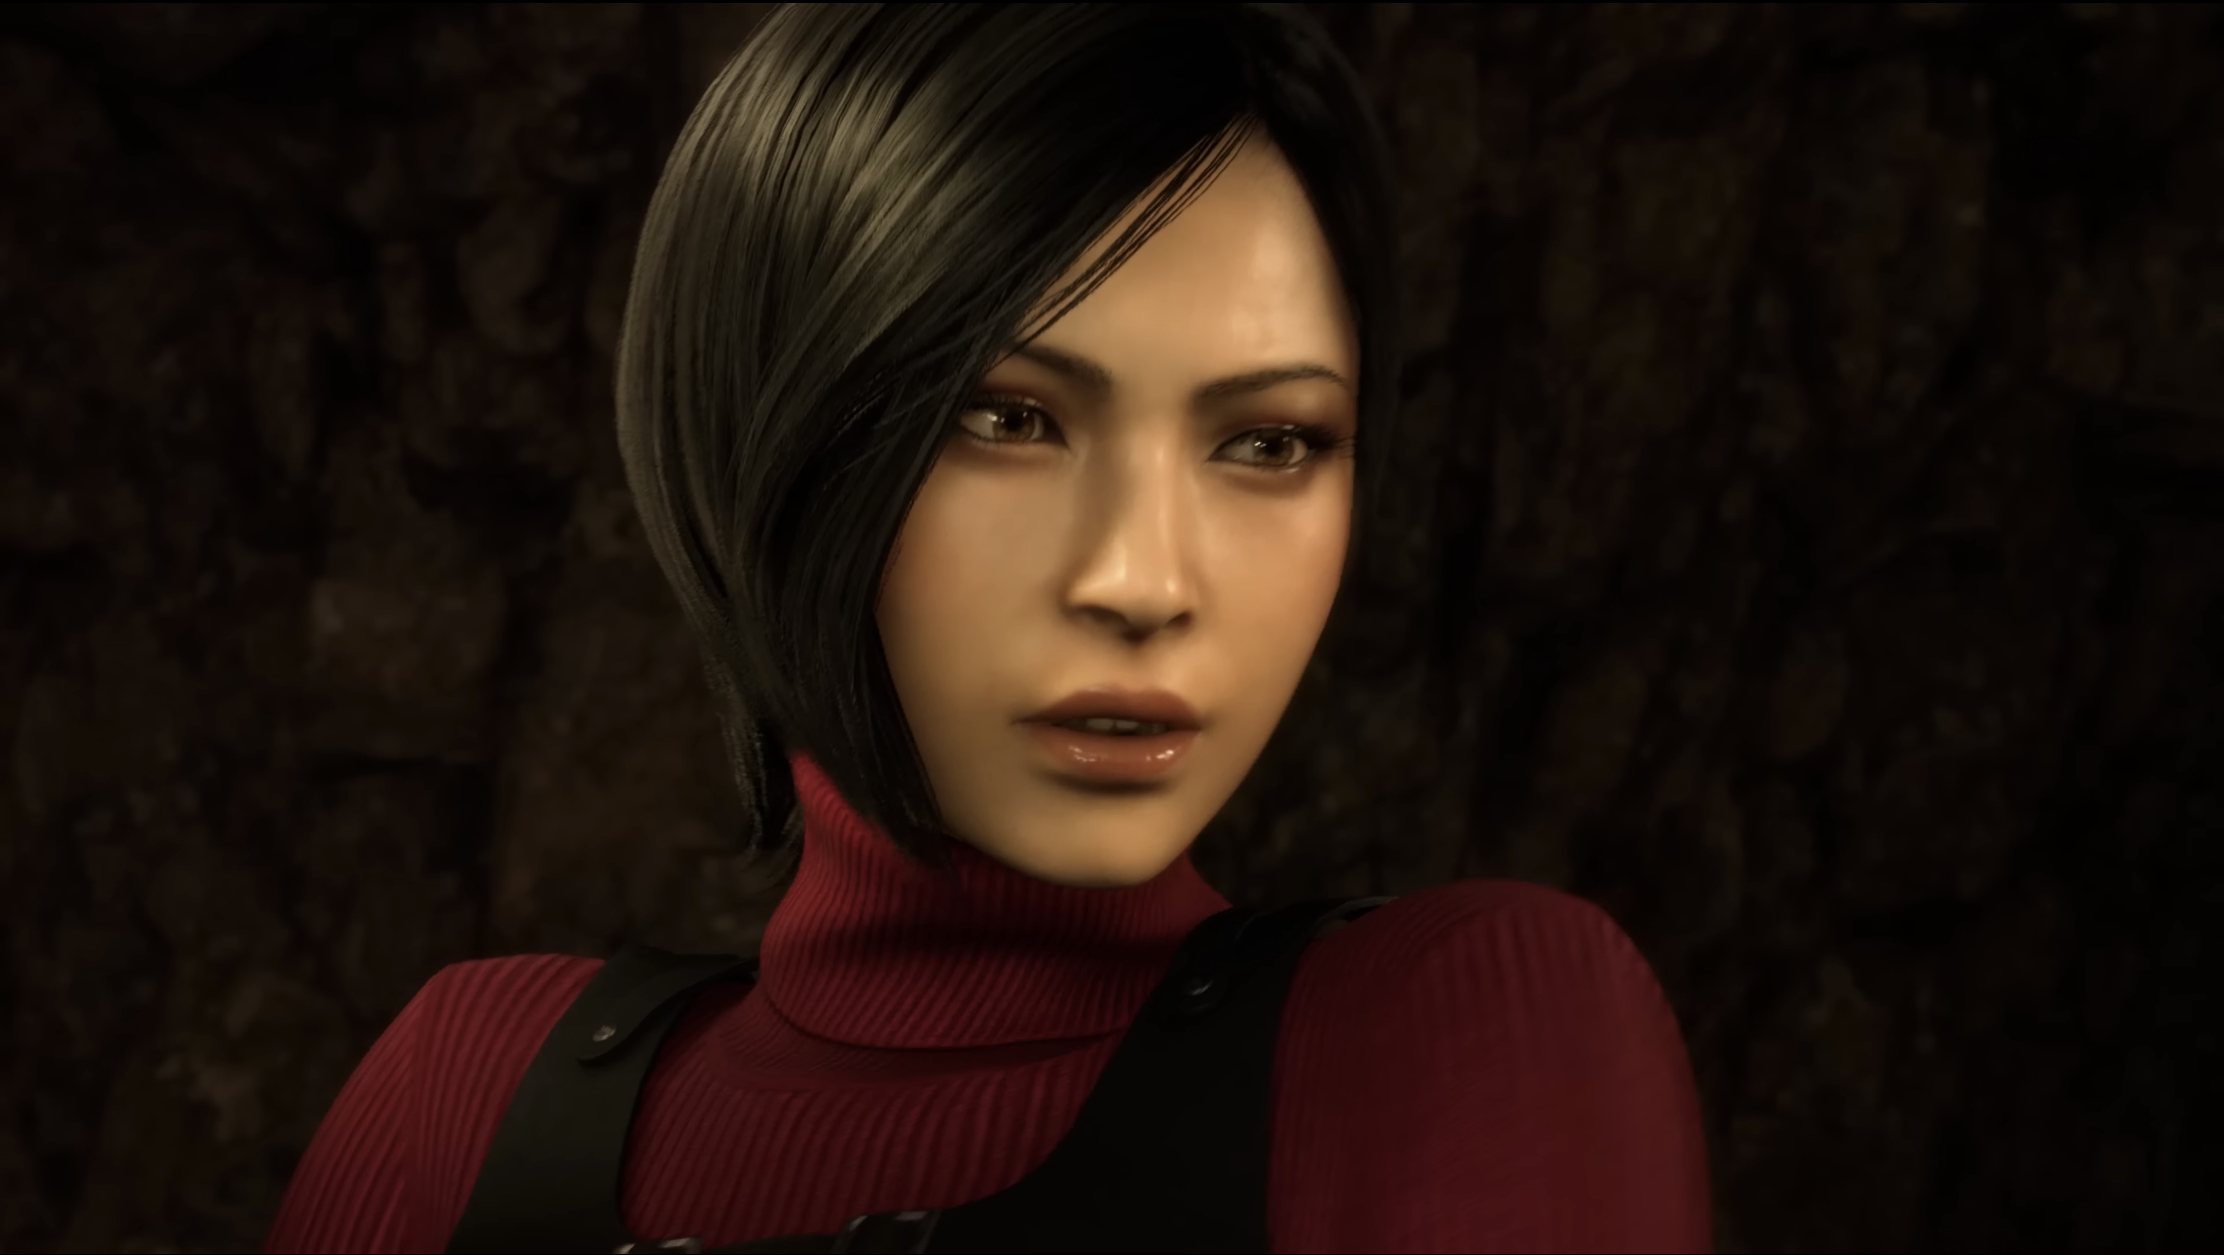 Instagram model confirms she's Resident Evil 4 remake's Ashley actress